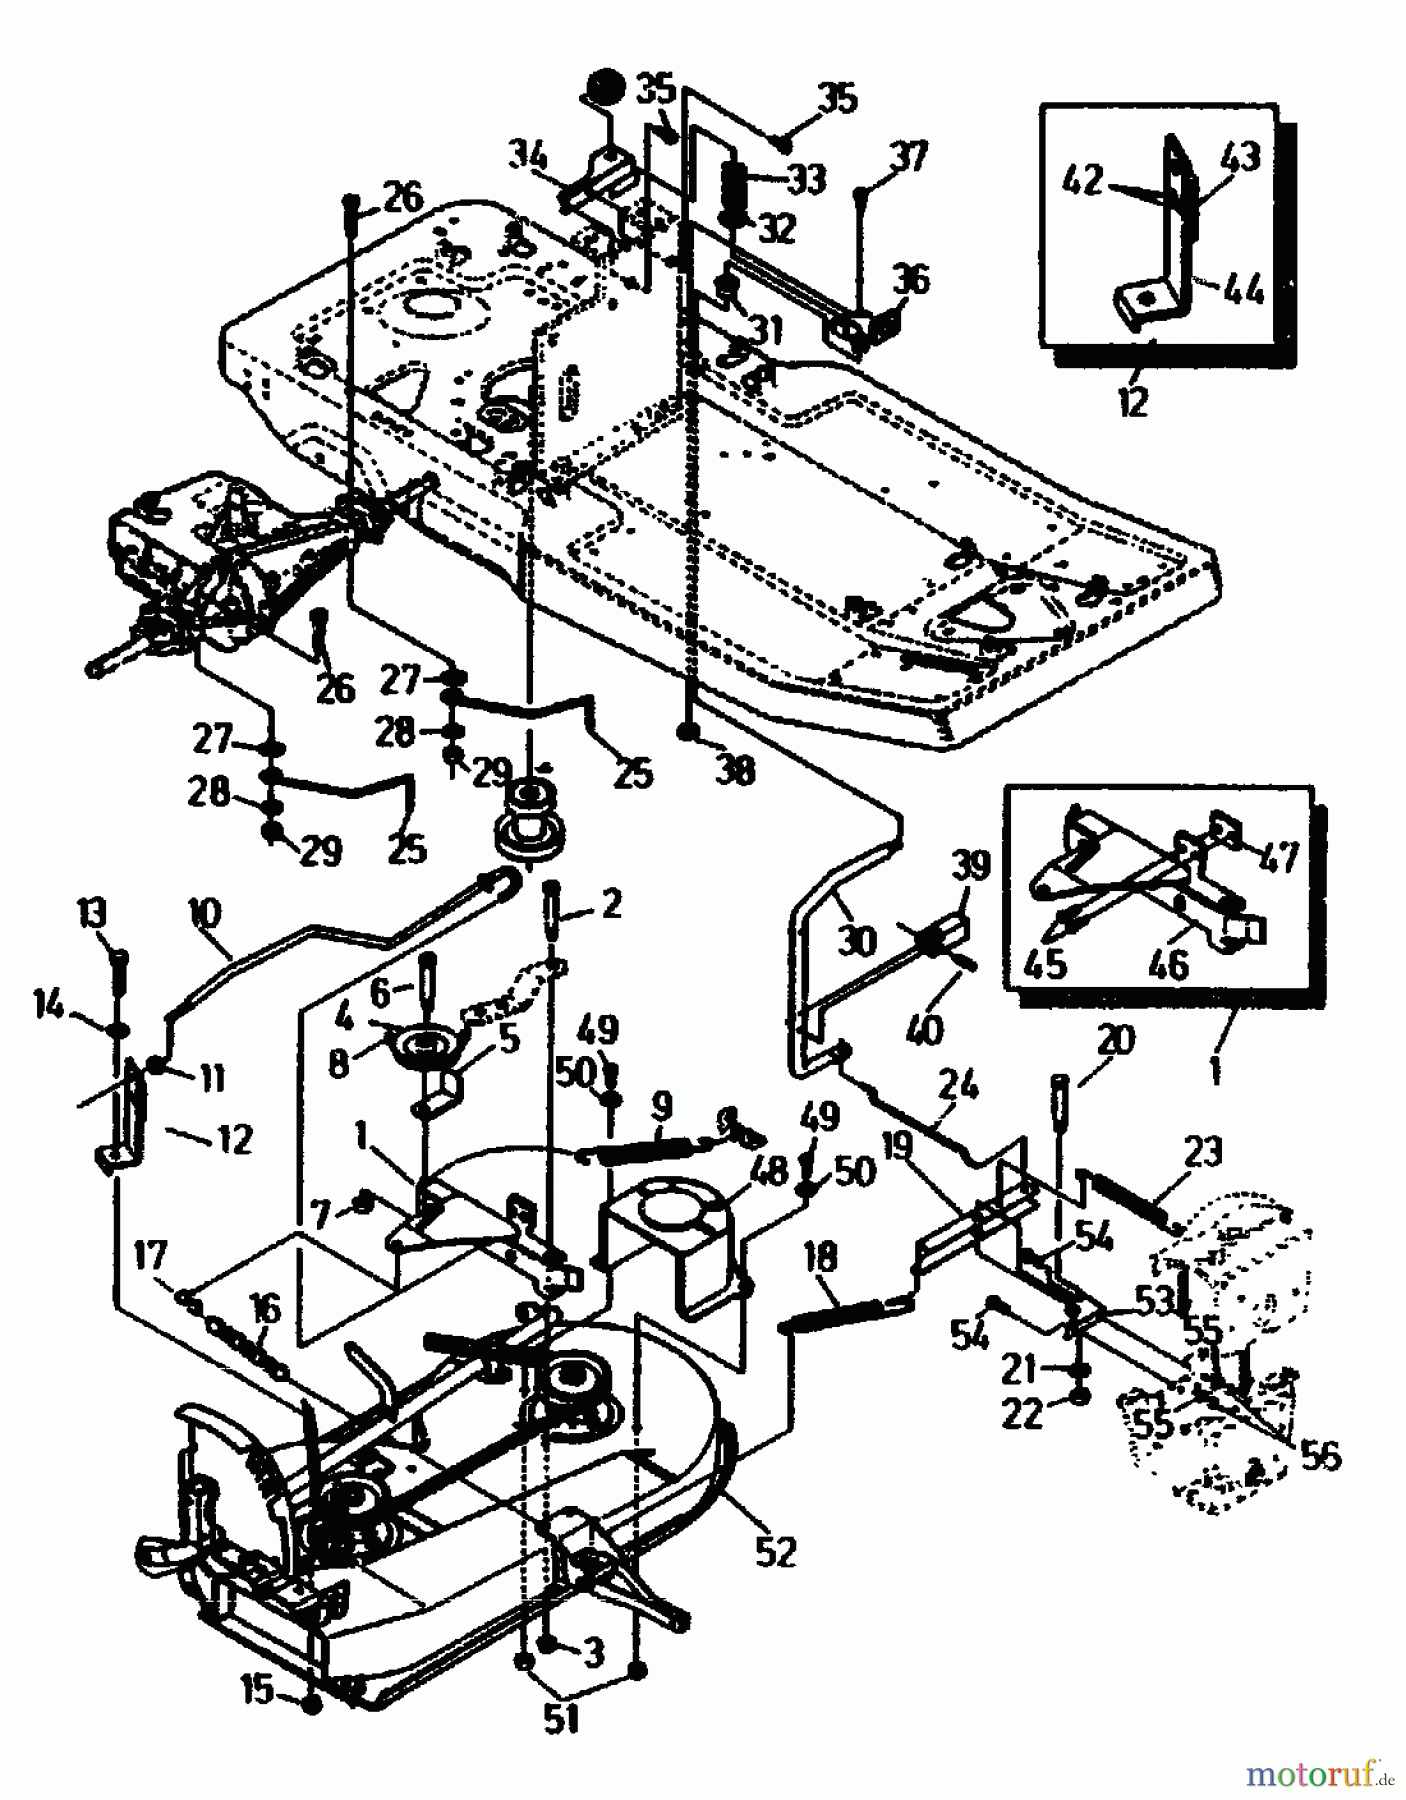  Gutbrod Lawn tractors ASB 90-10 04015.01  (1991) Deck lift